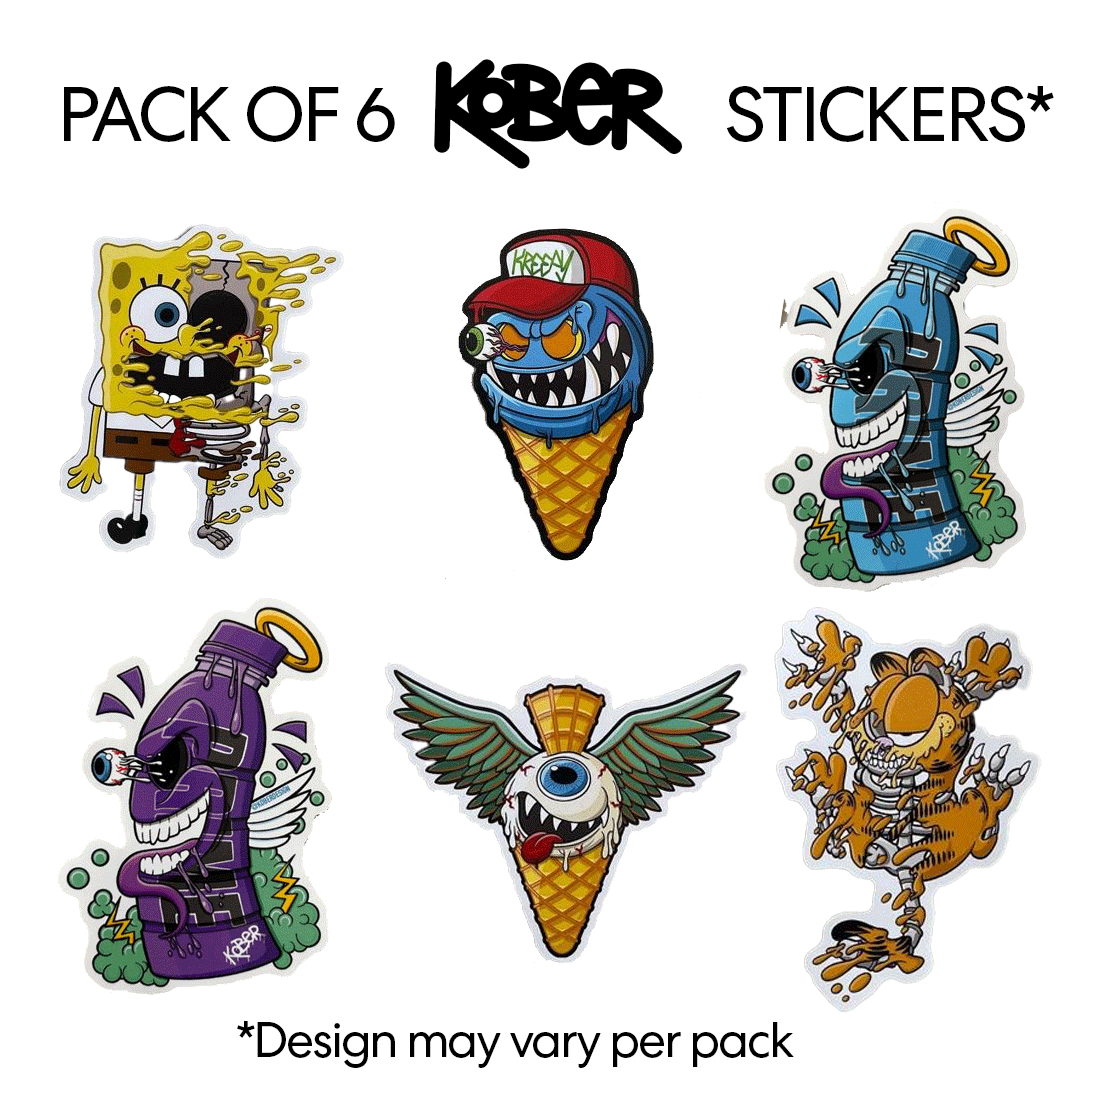 Set of 6 stickers designed by London Street Artist Kober